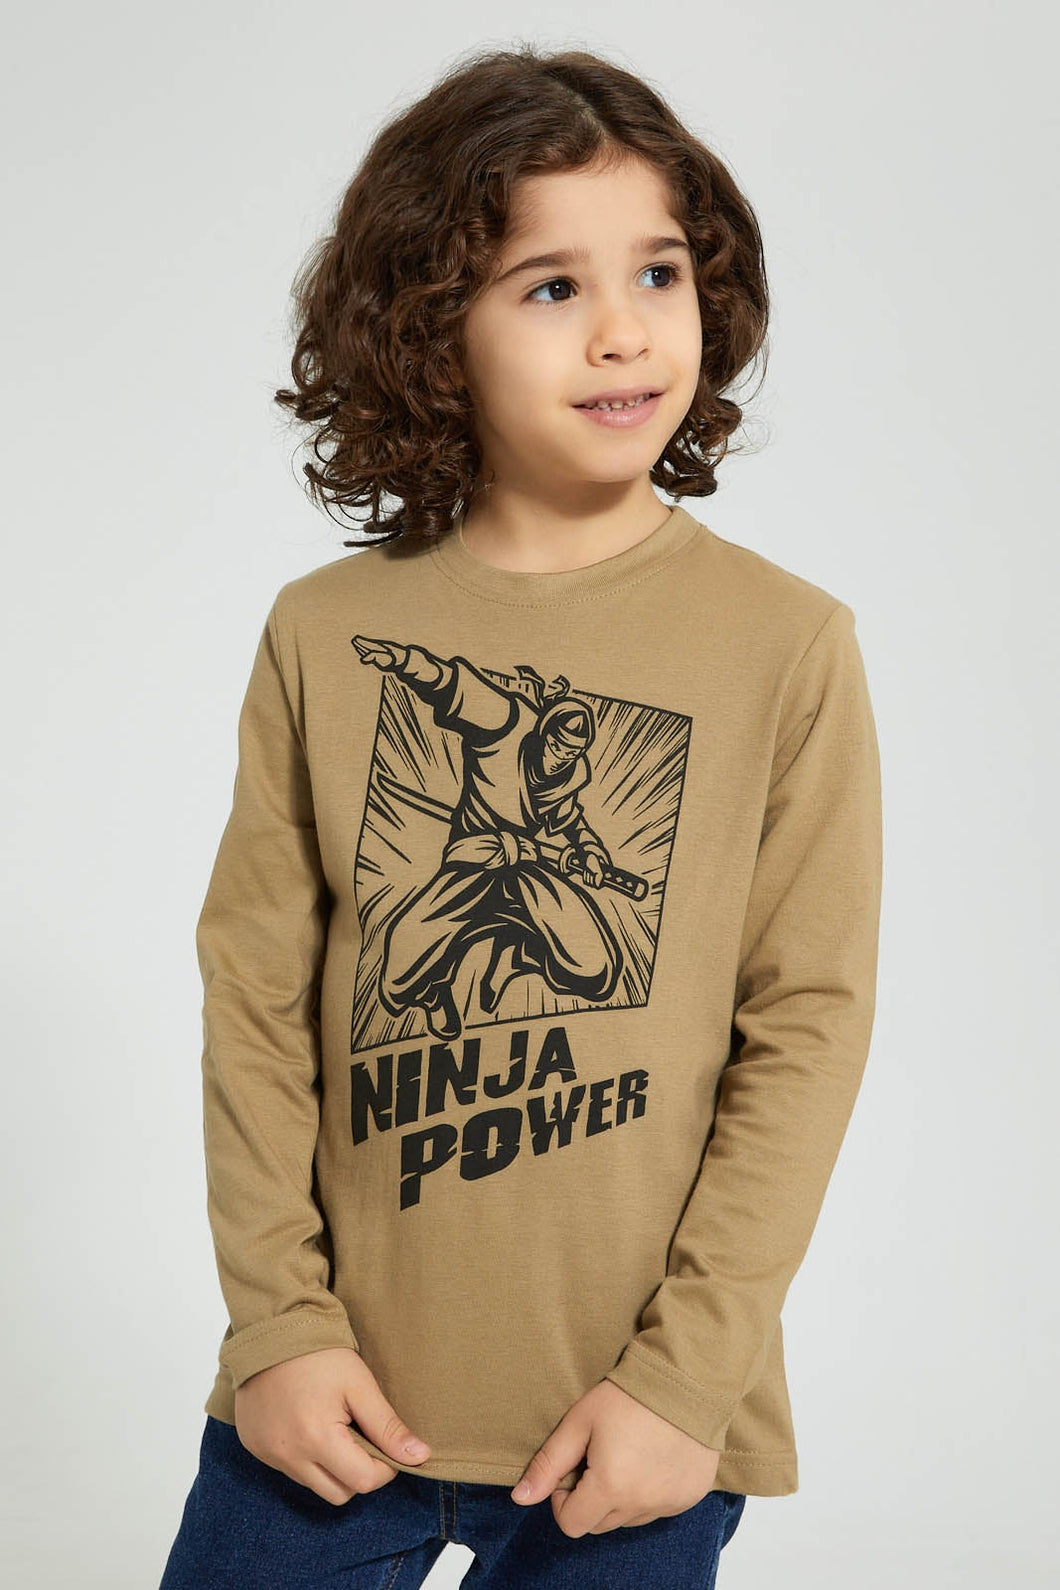 Beige Ninja Power Printed Long Sleeved T-shirt تيشيرت باللون البيج مطبوع بأكمام طويلة